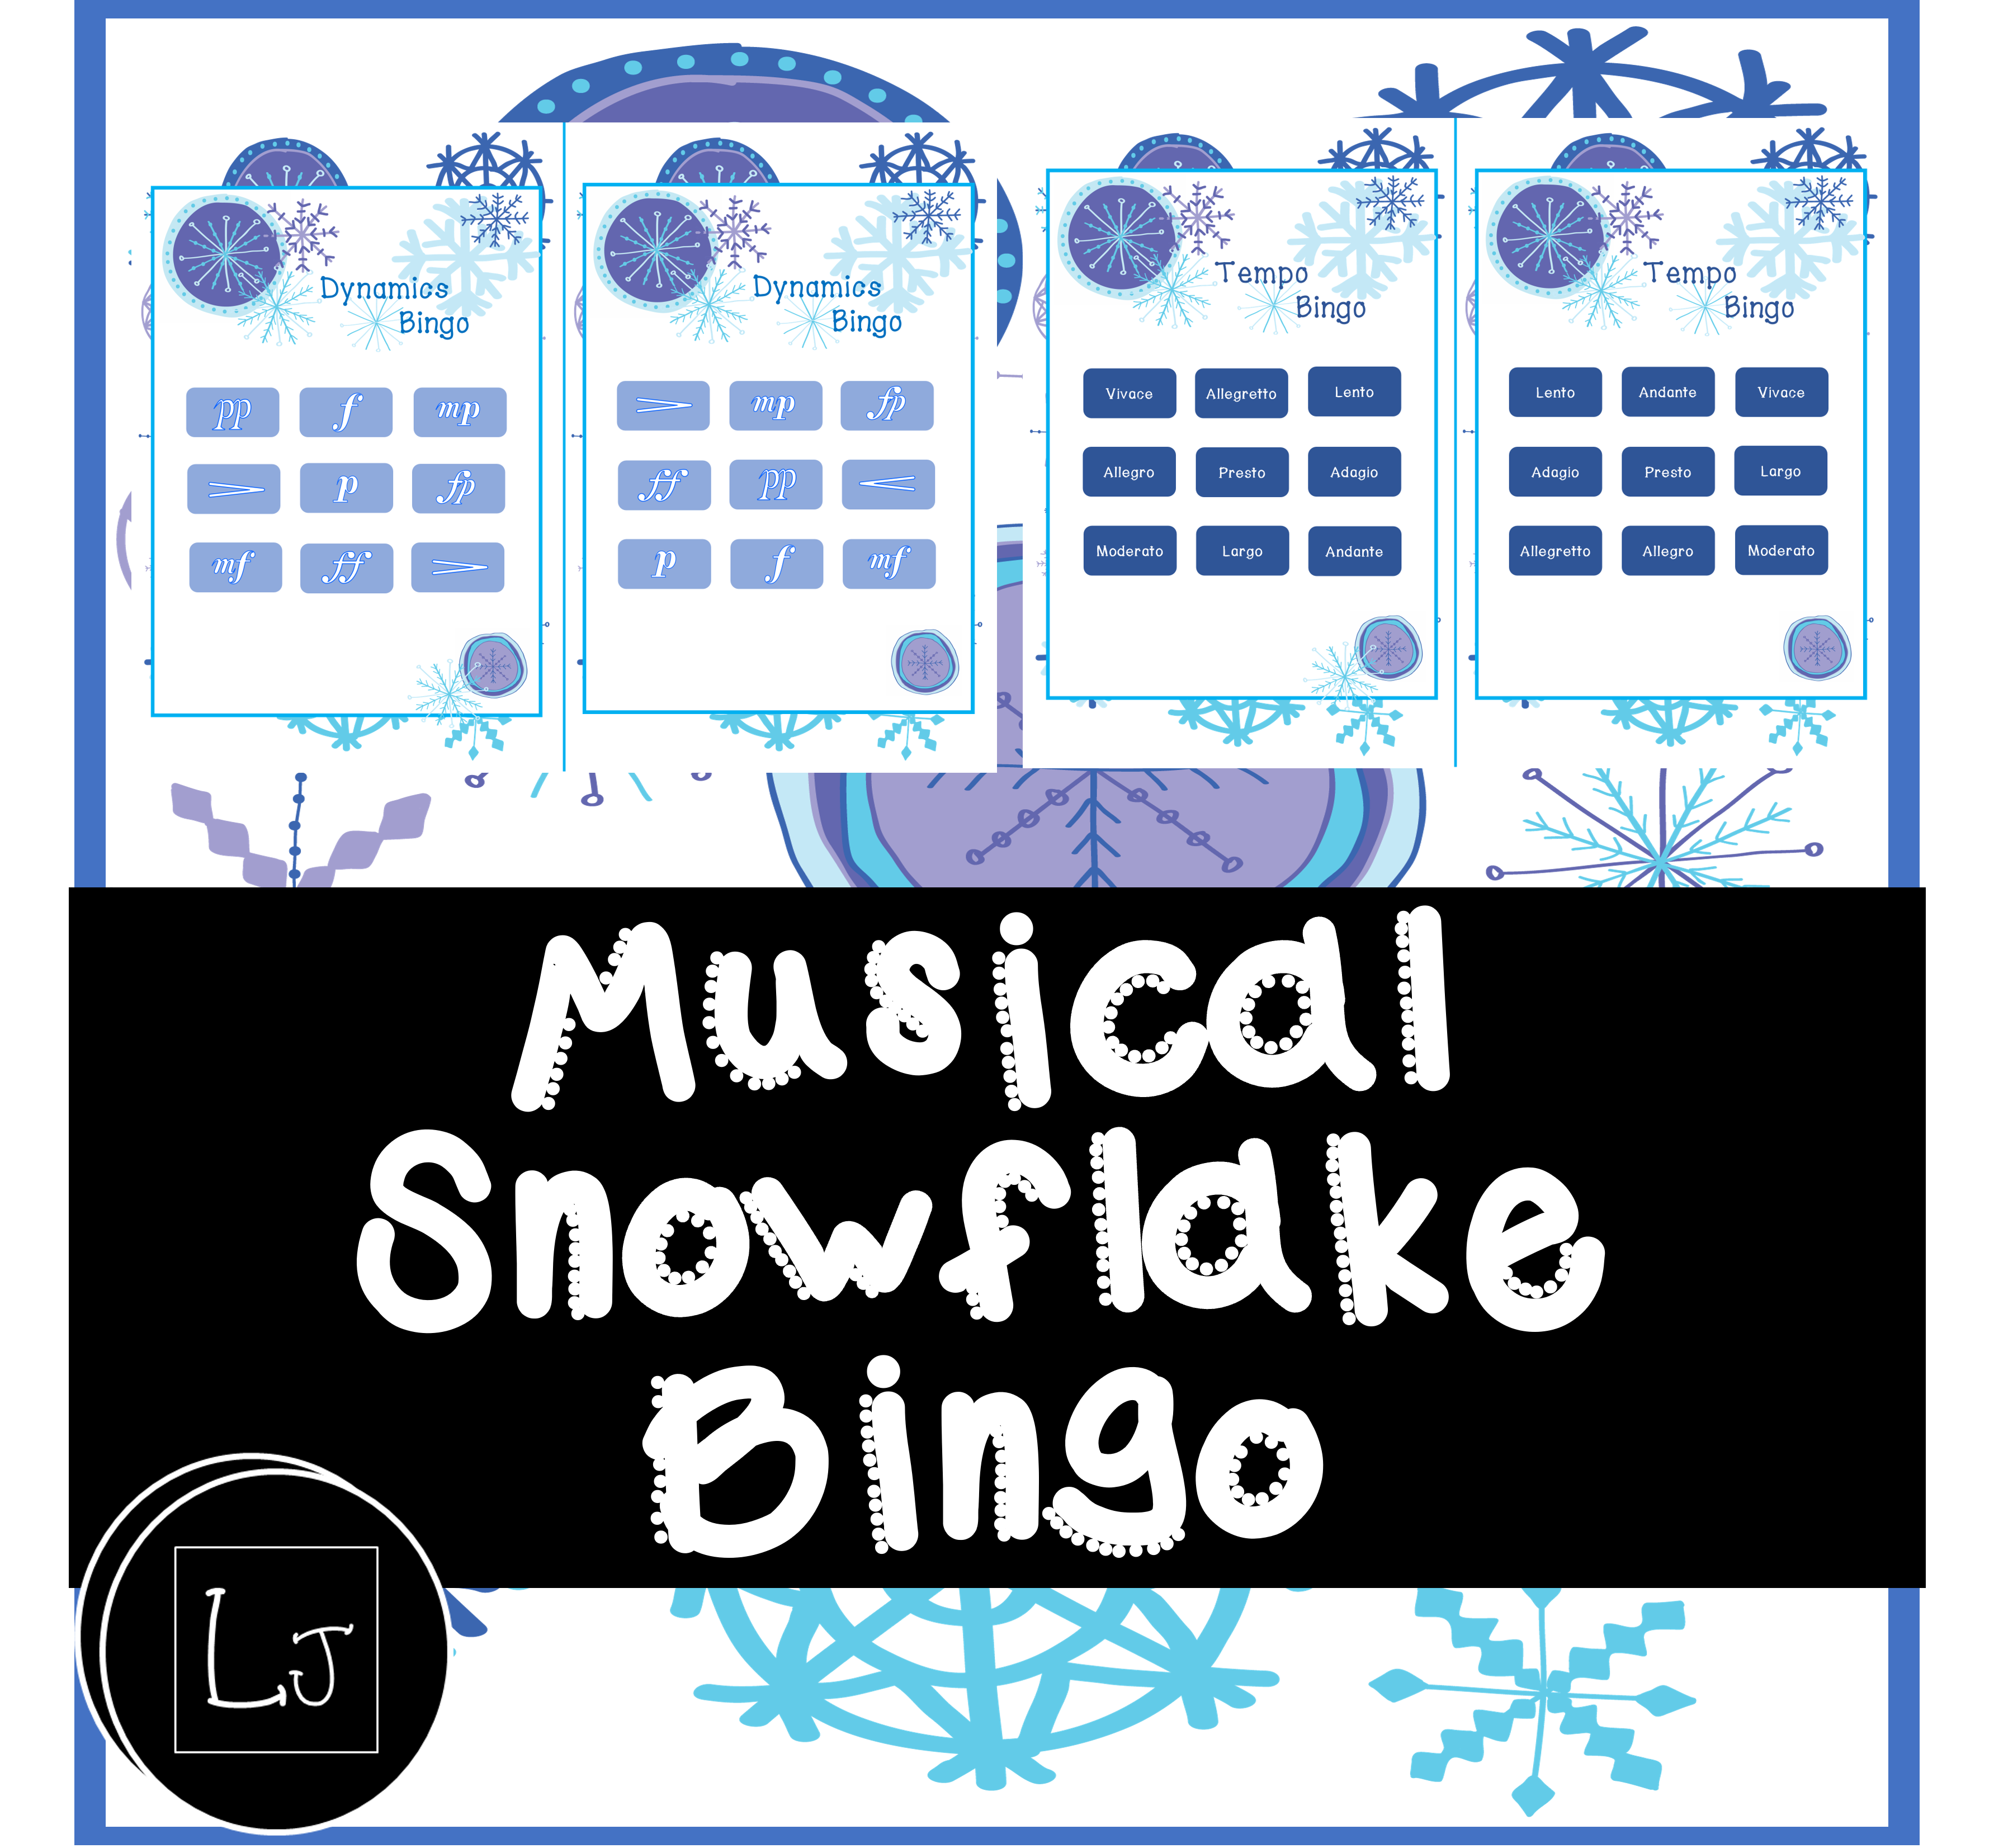 Italian music terms bingo snowflake